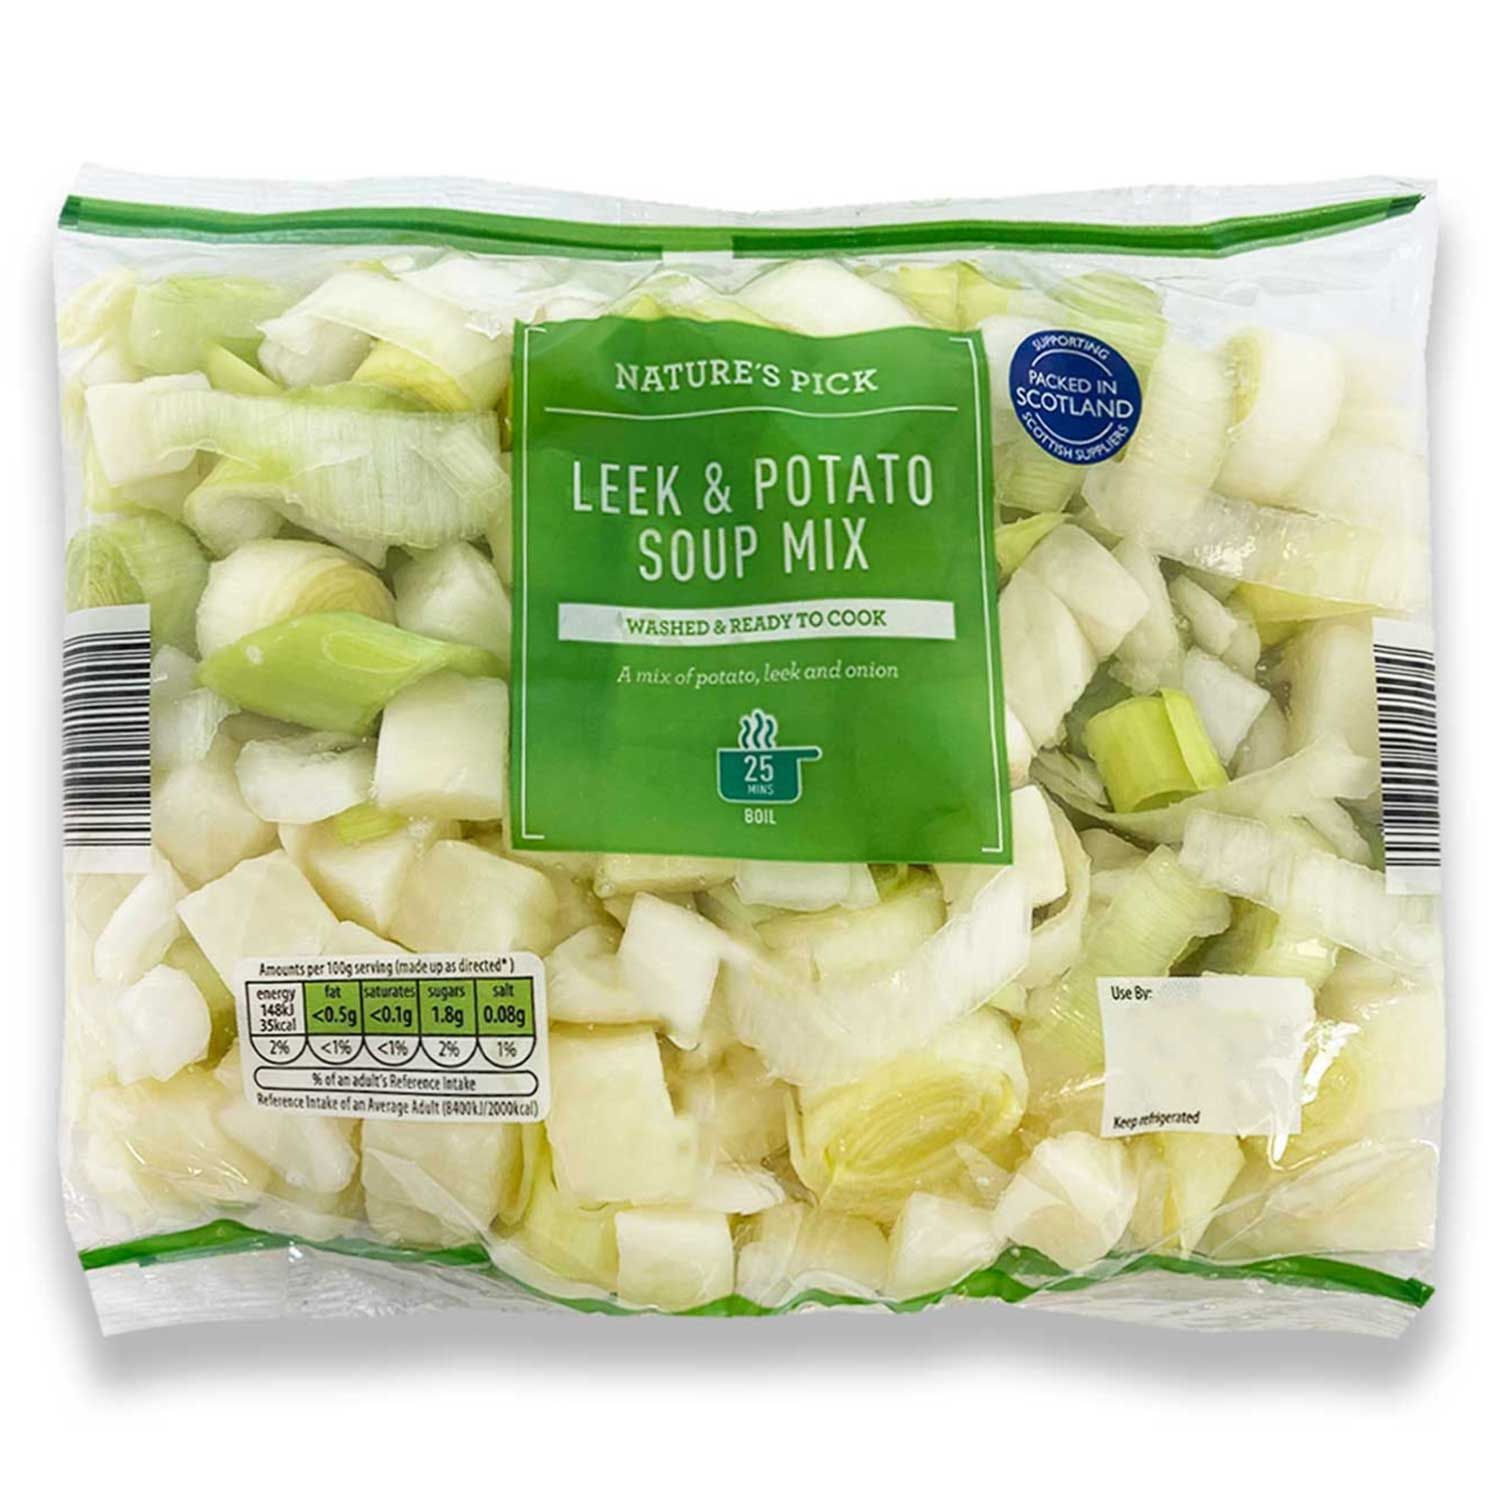 Nature's Pick Leek & Potato Soup Mix 600g | ALDI